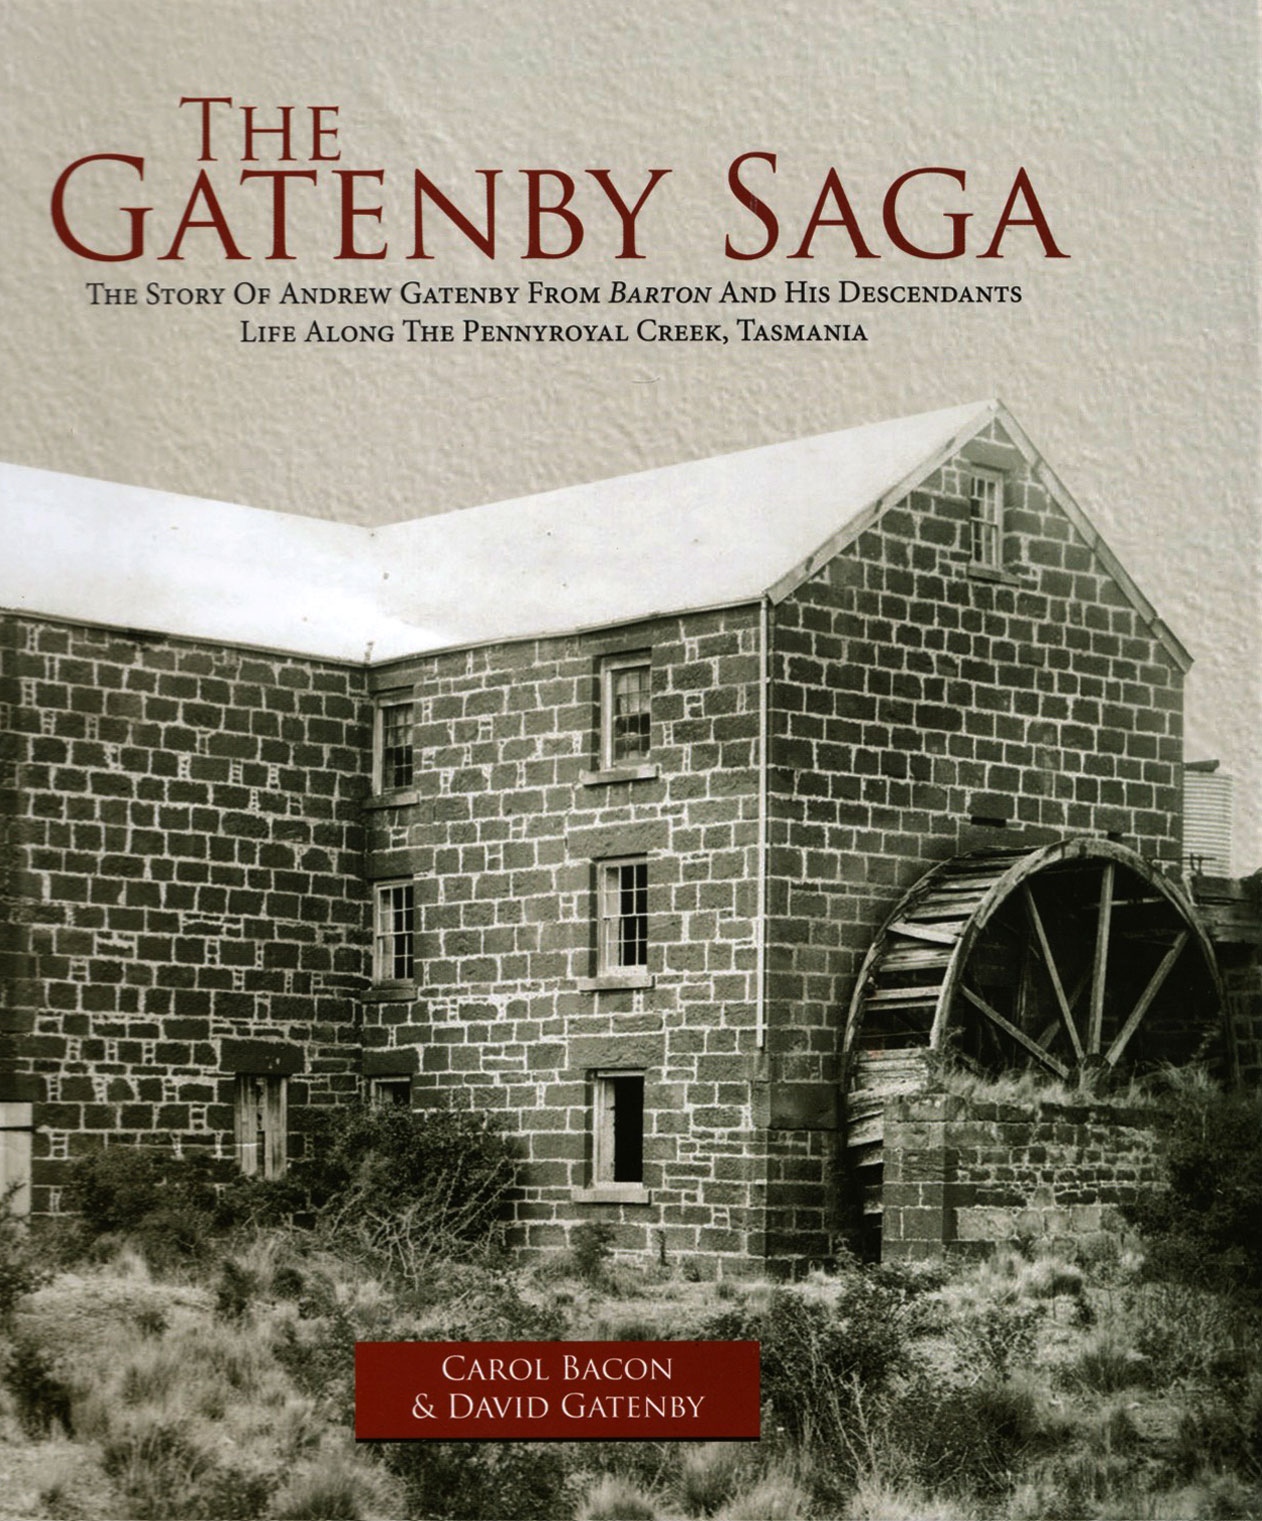 The Gatenby Saga